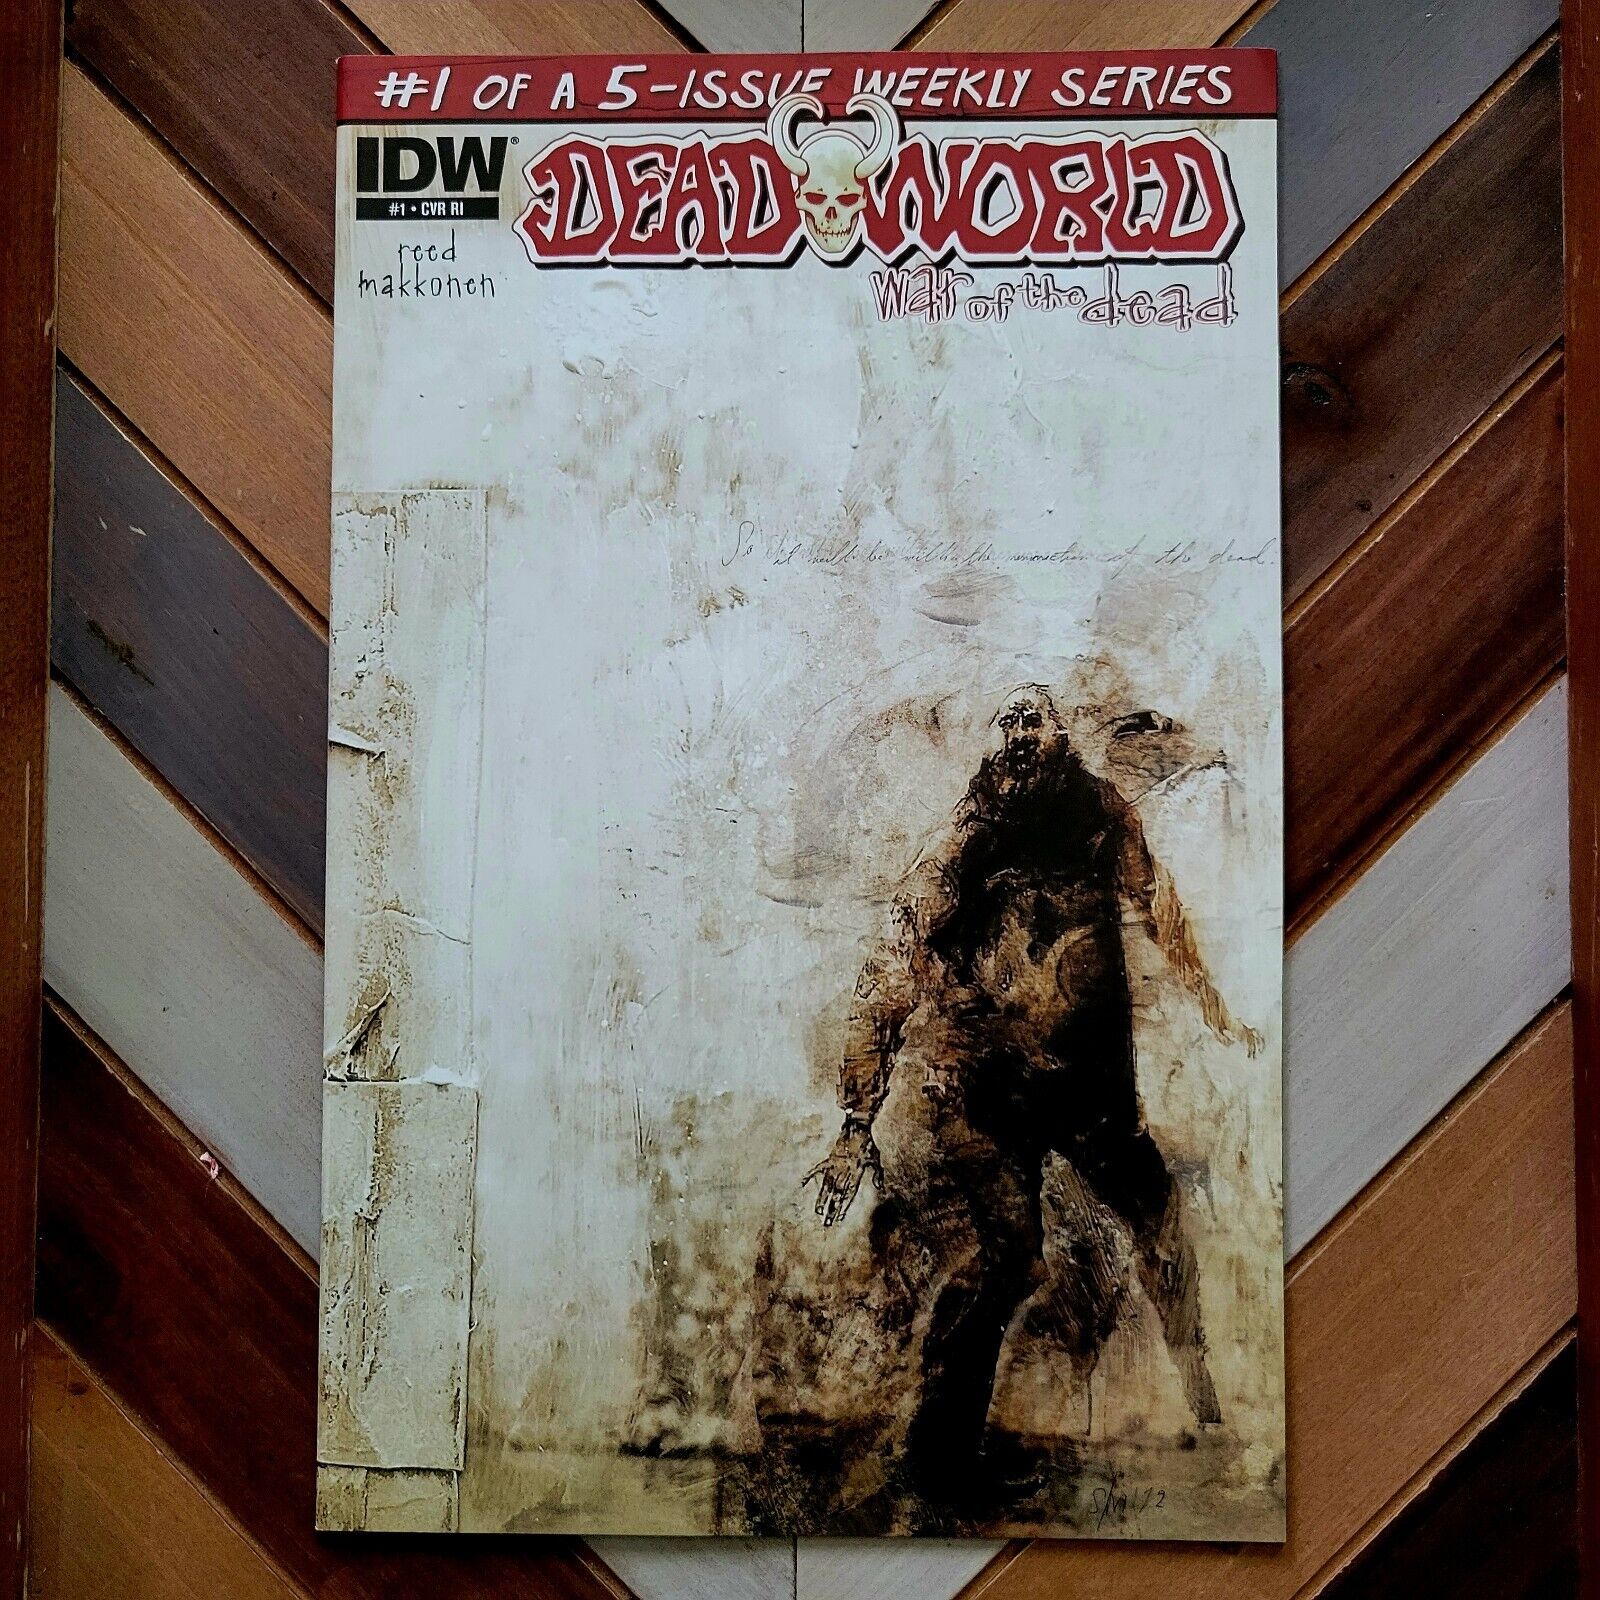 DEAD WORLD: War Of The Dead #1 (IDW 2012) 1st Issue HORROR By REED MAKONNEN